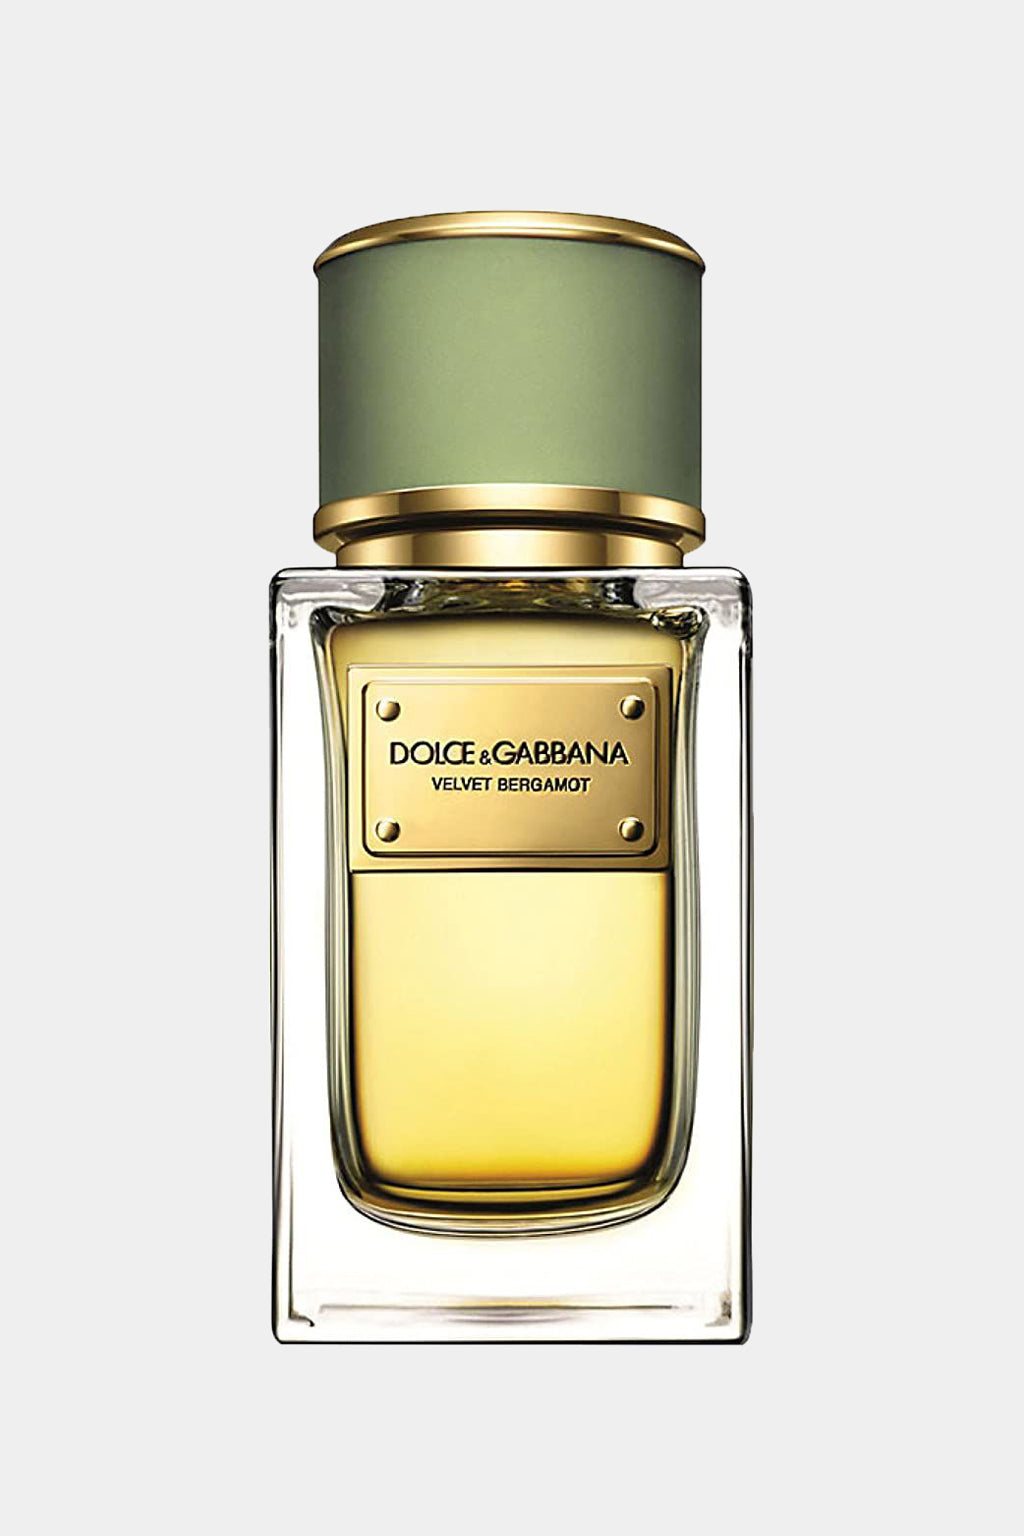 Dolce&Gabbana - Velvet Bergamot Eau de Parfum